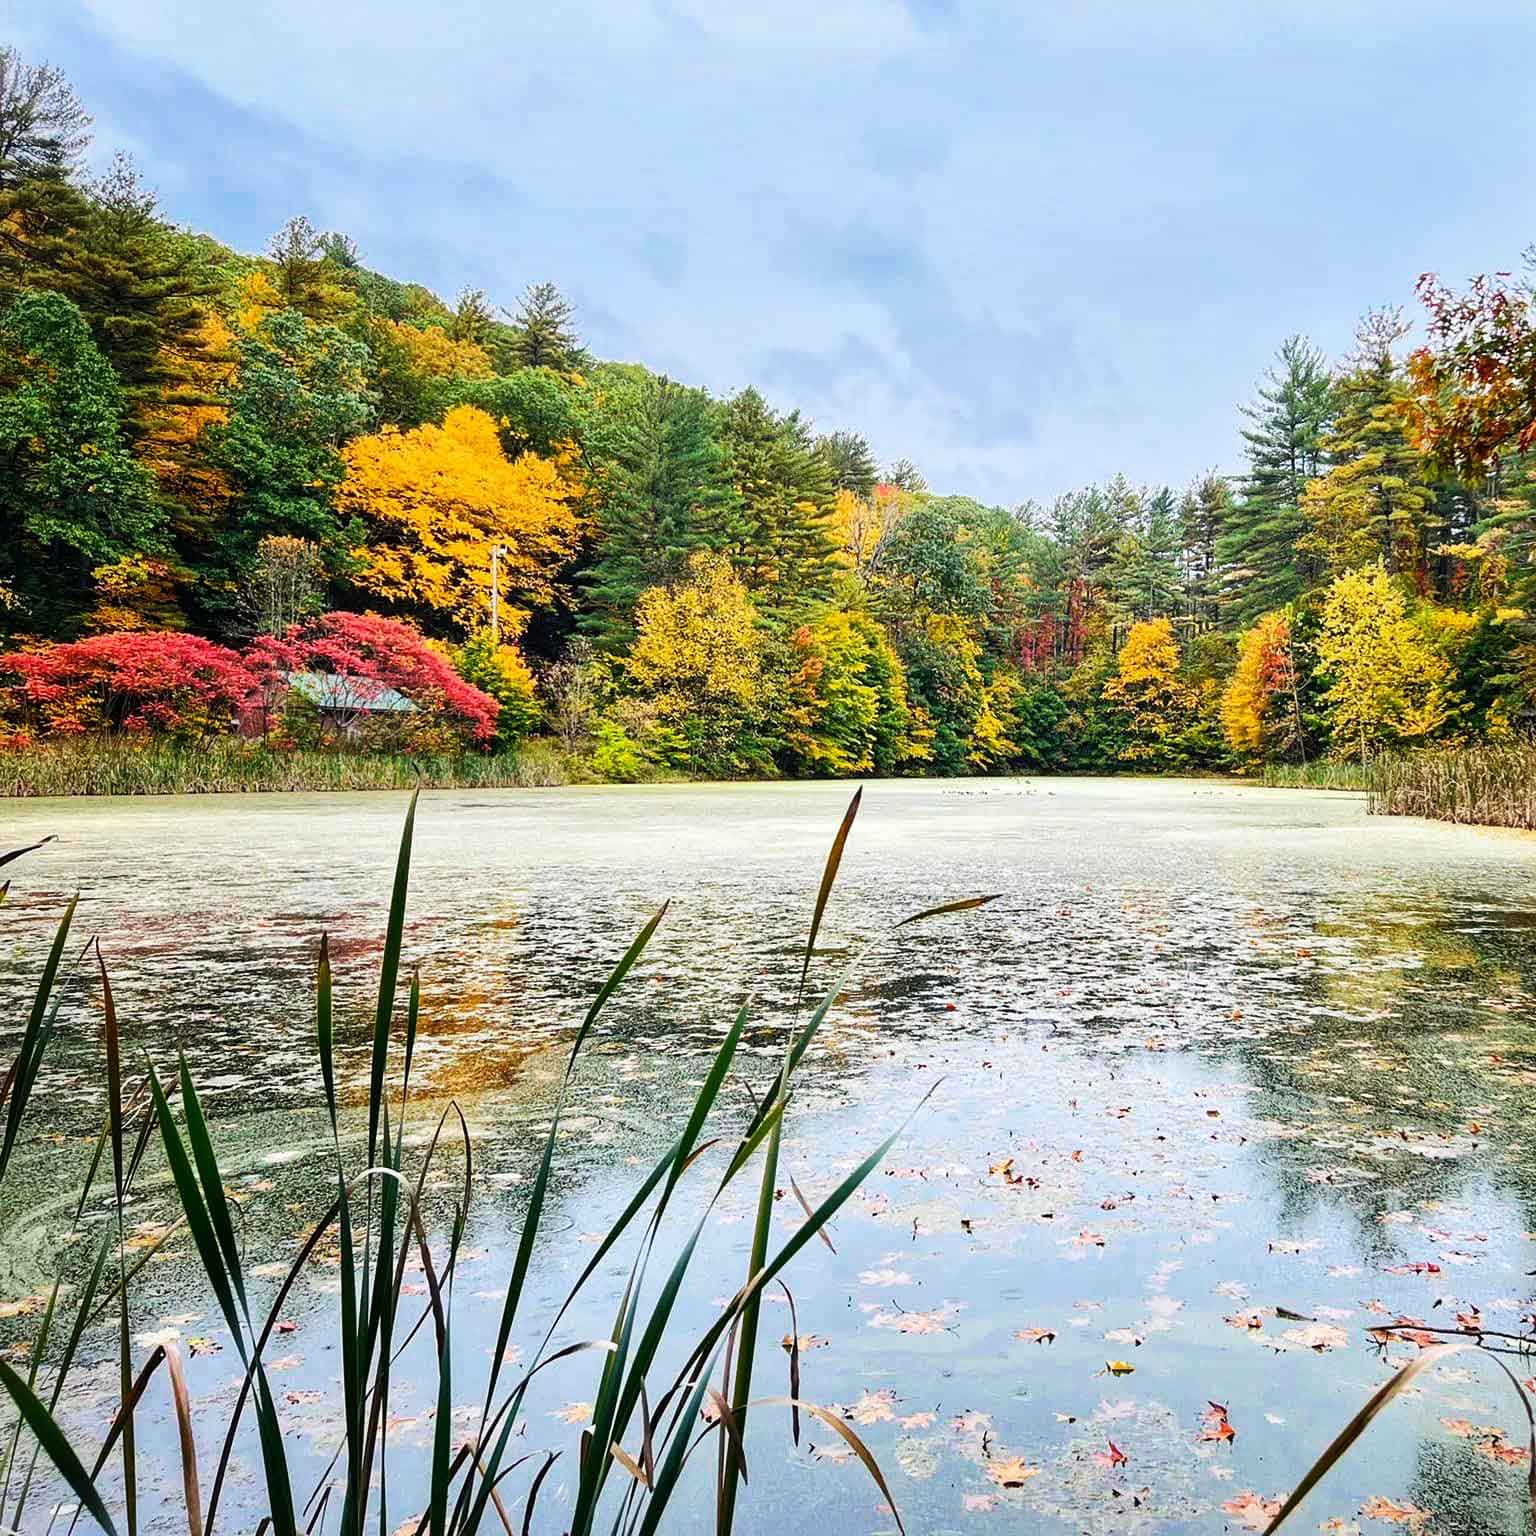 Highland Pond with fall foliage